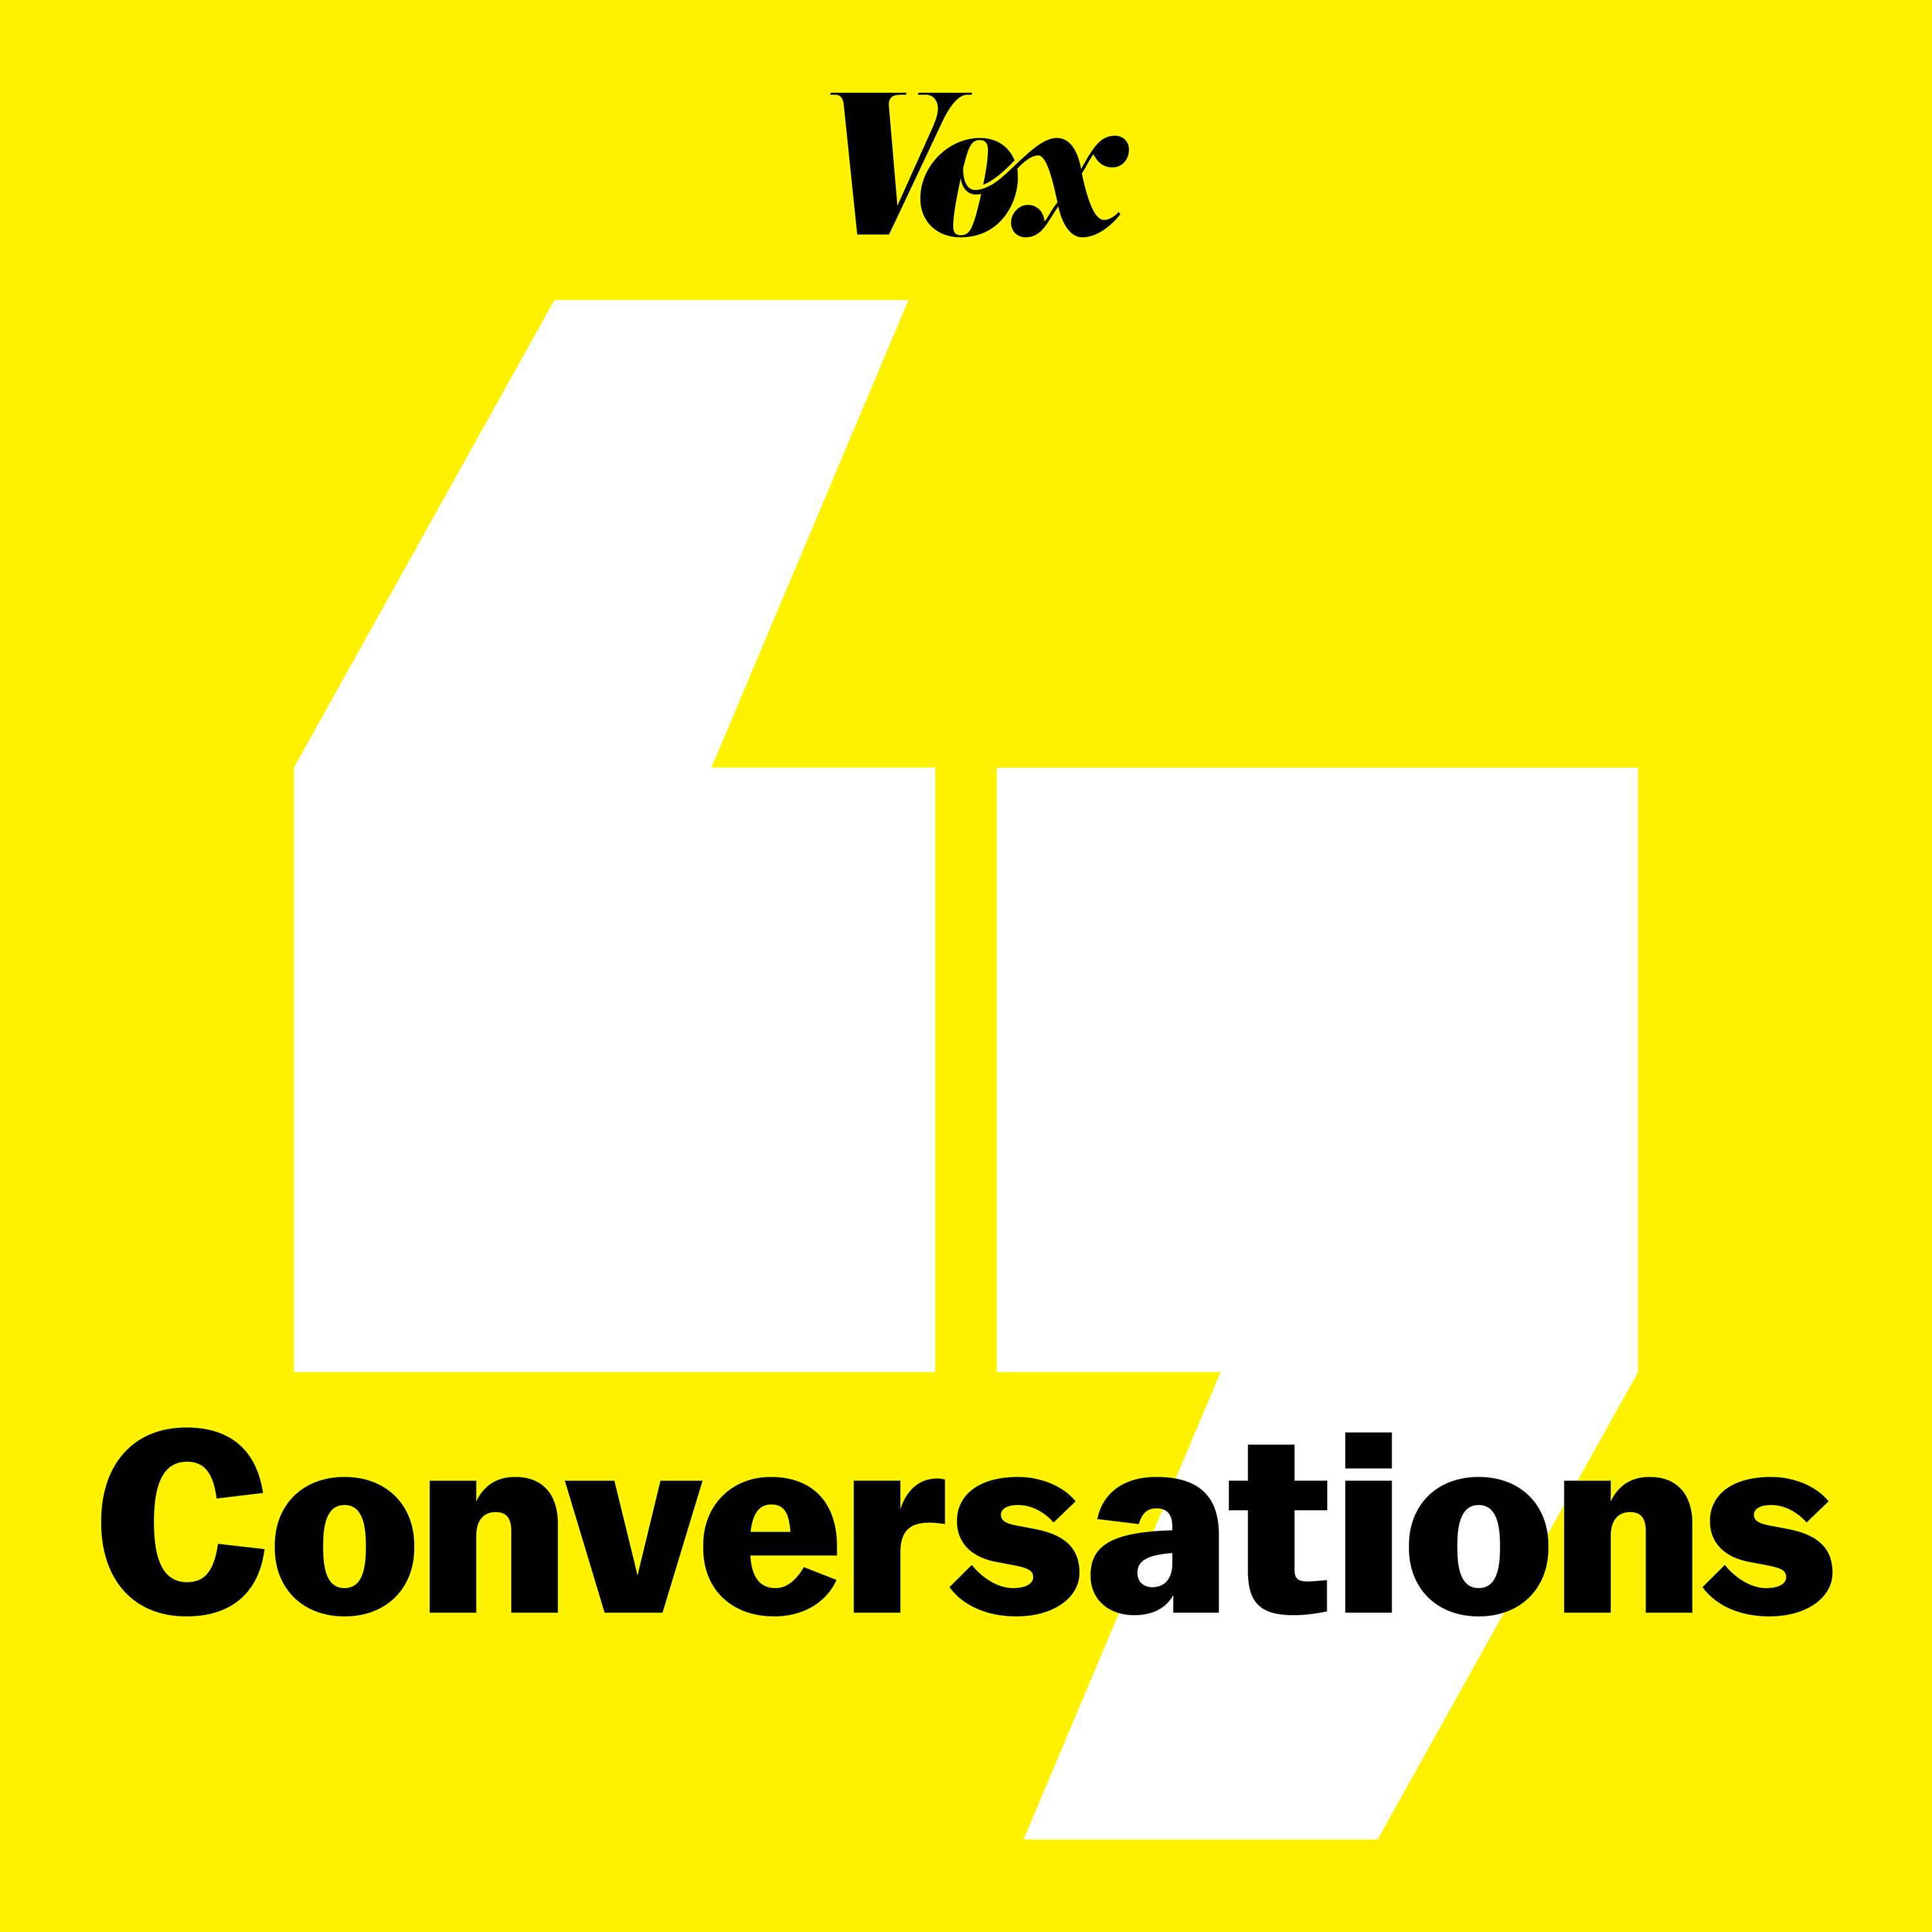 Podcast: Vox Conversations